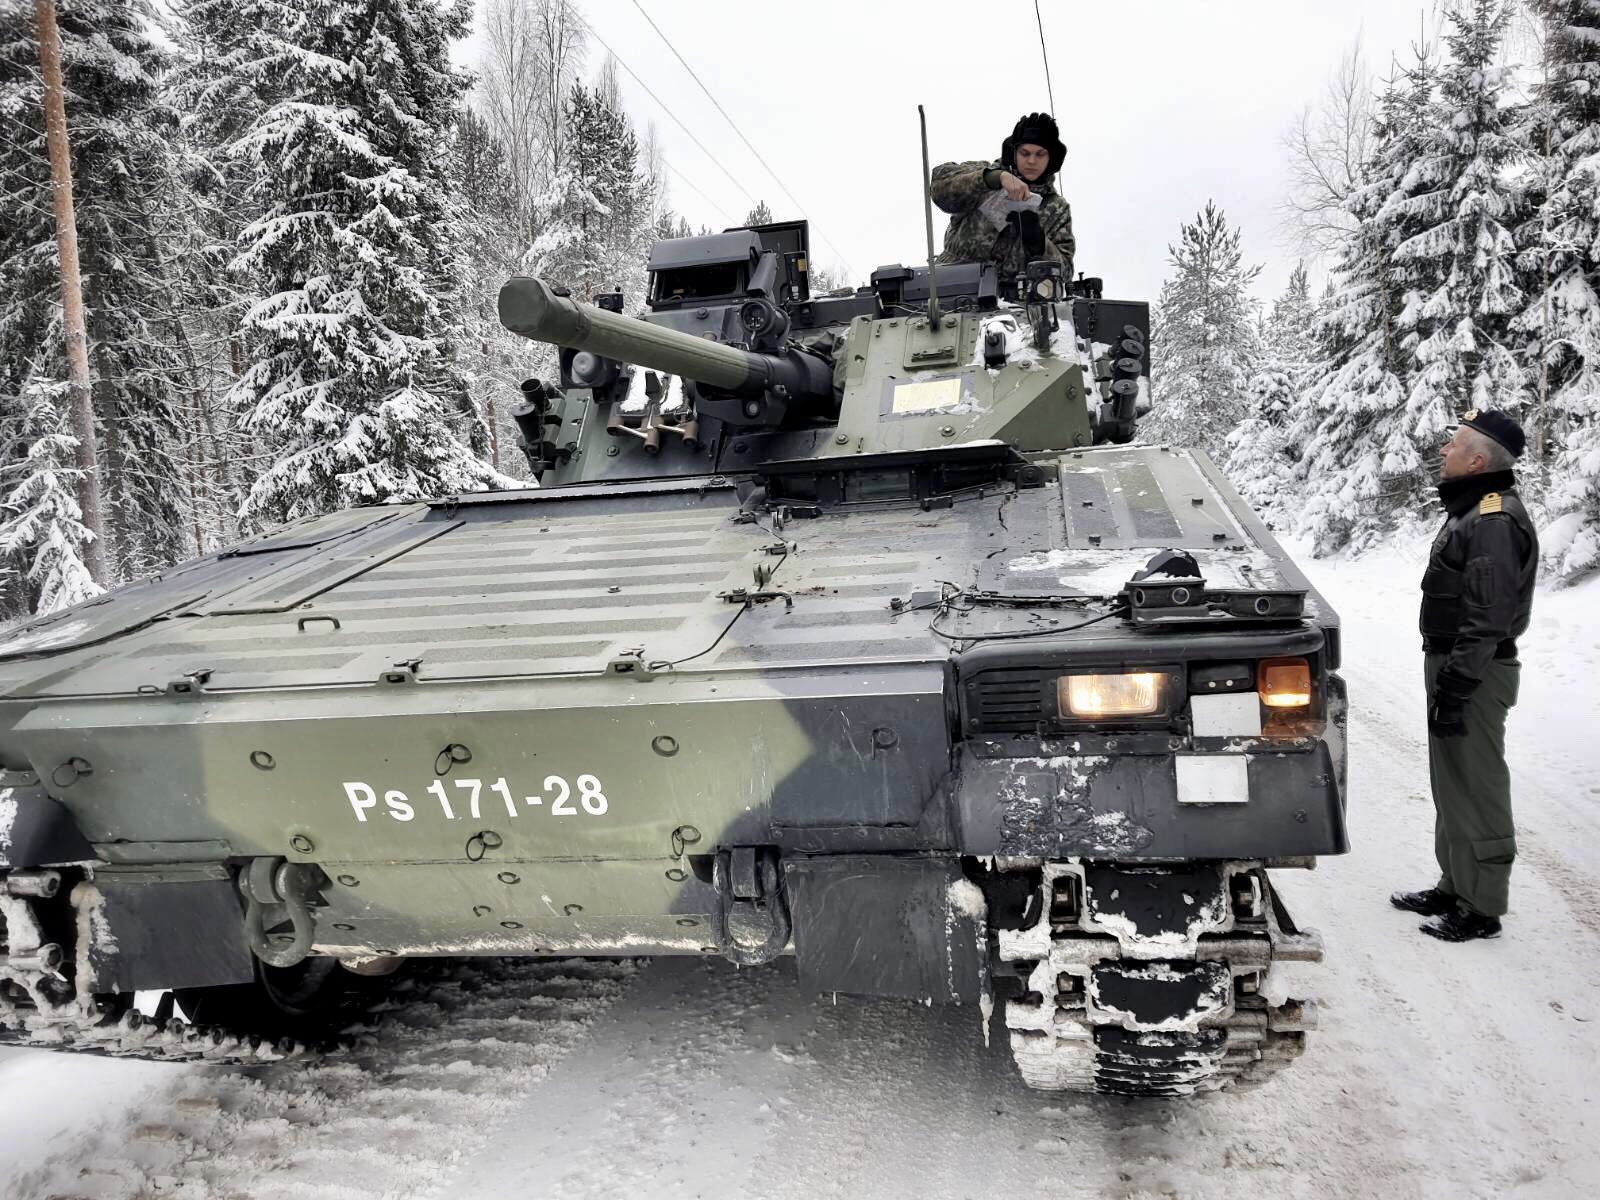 NATO's Deputy Supreme Allied Commander Europe (DSACEUR) Visited Finland